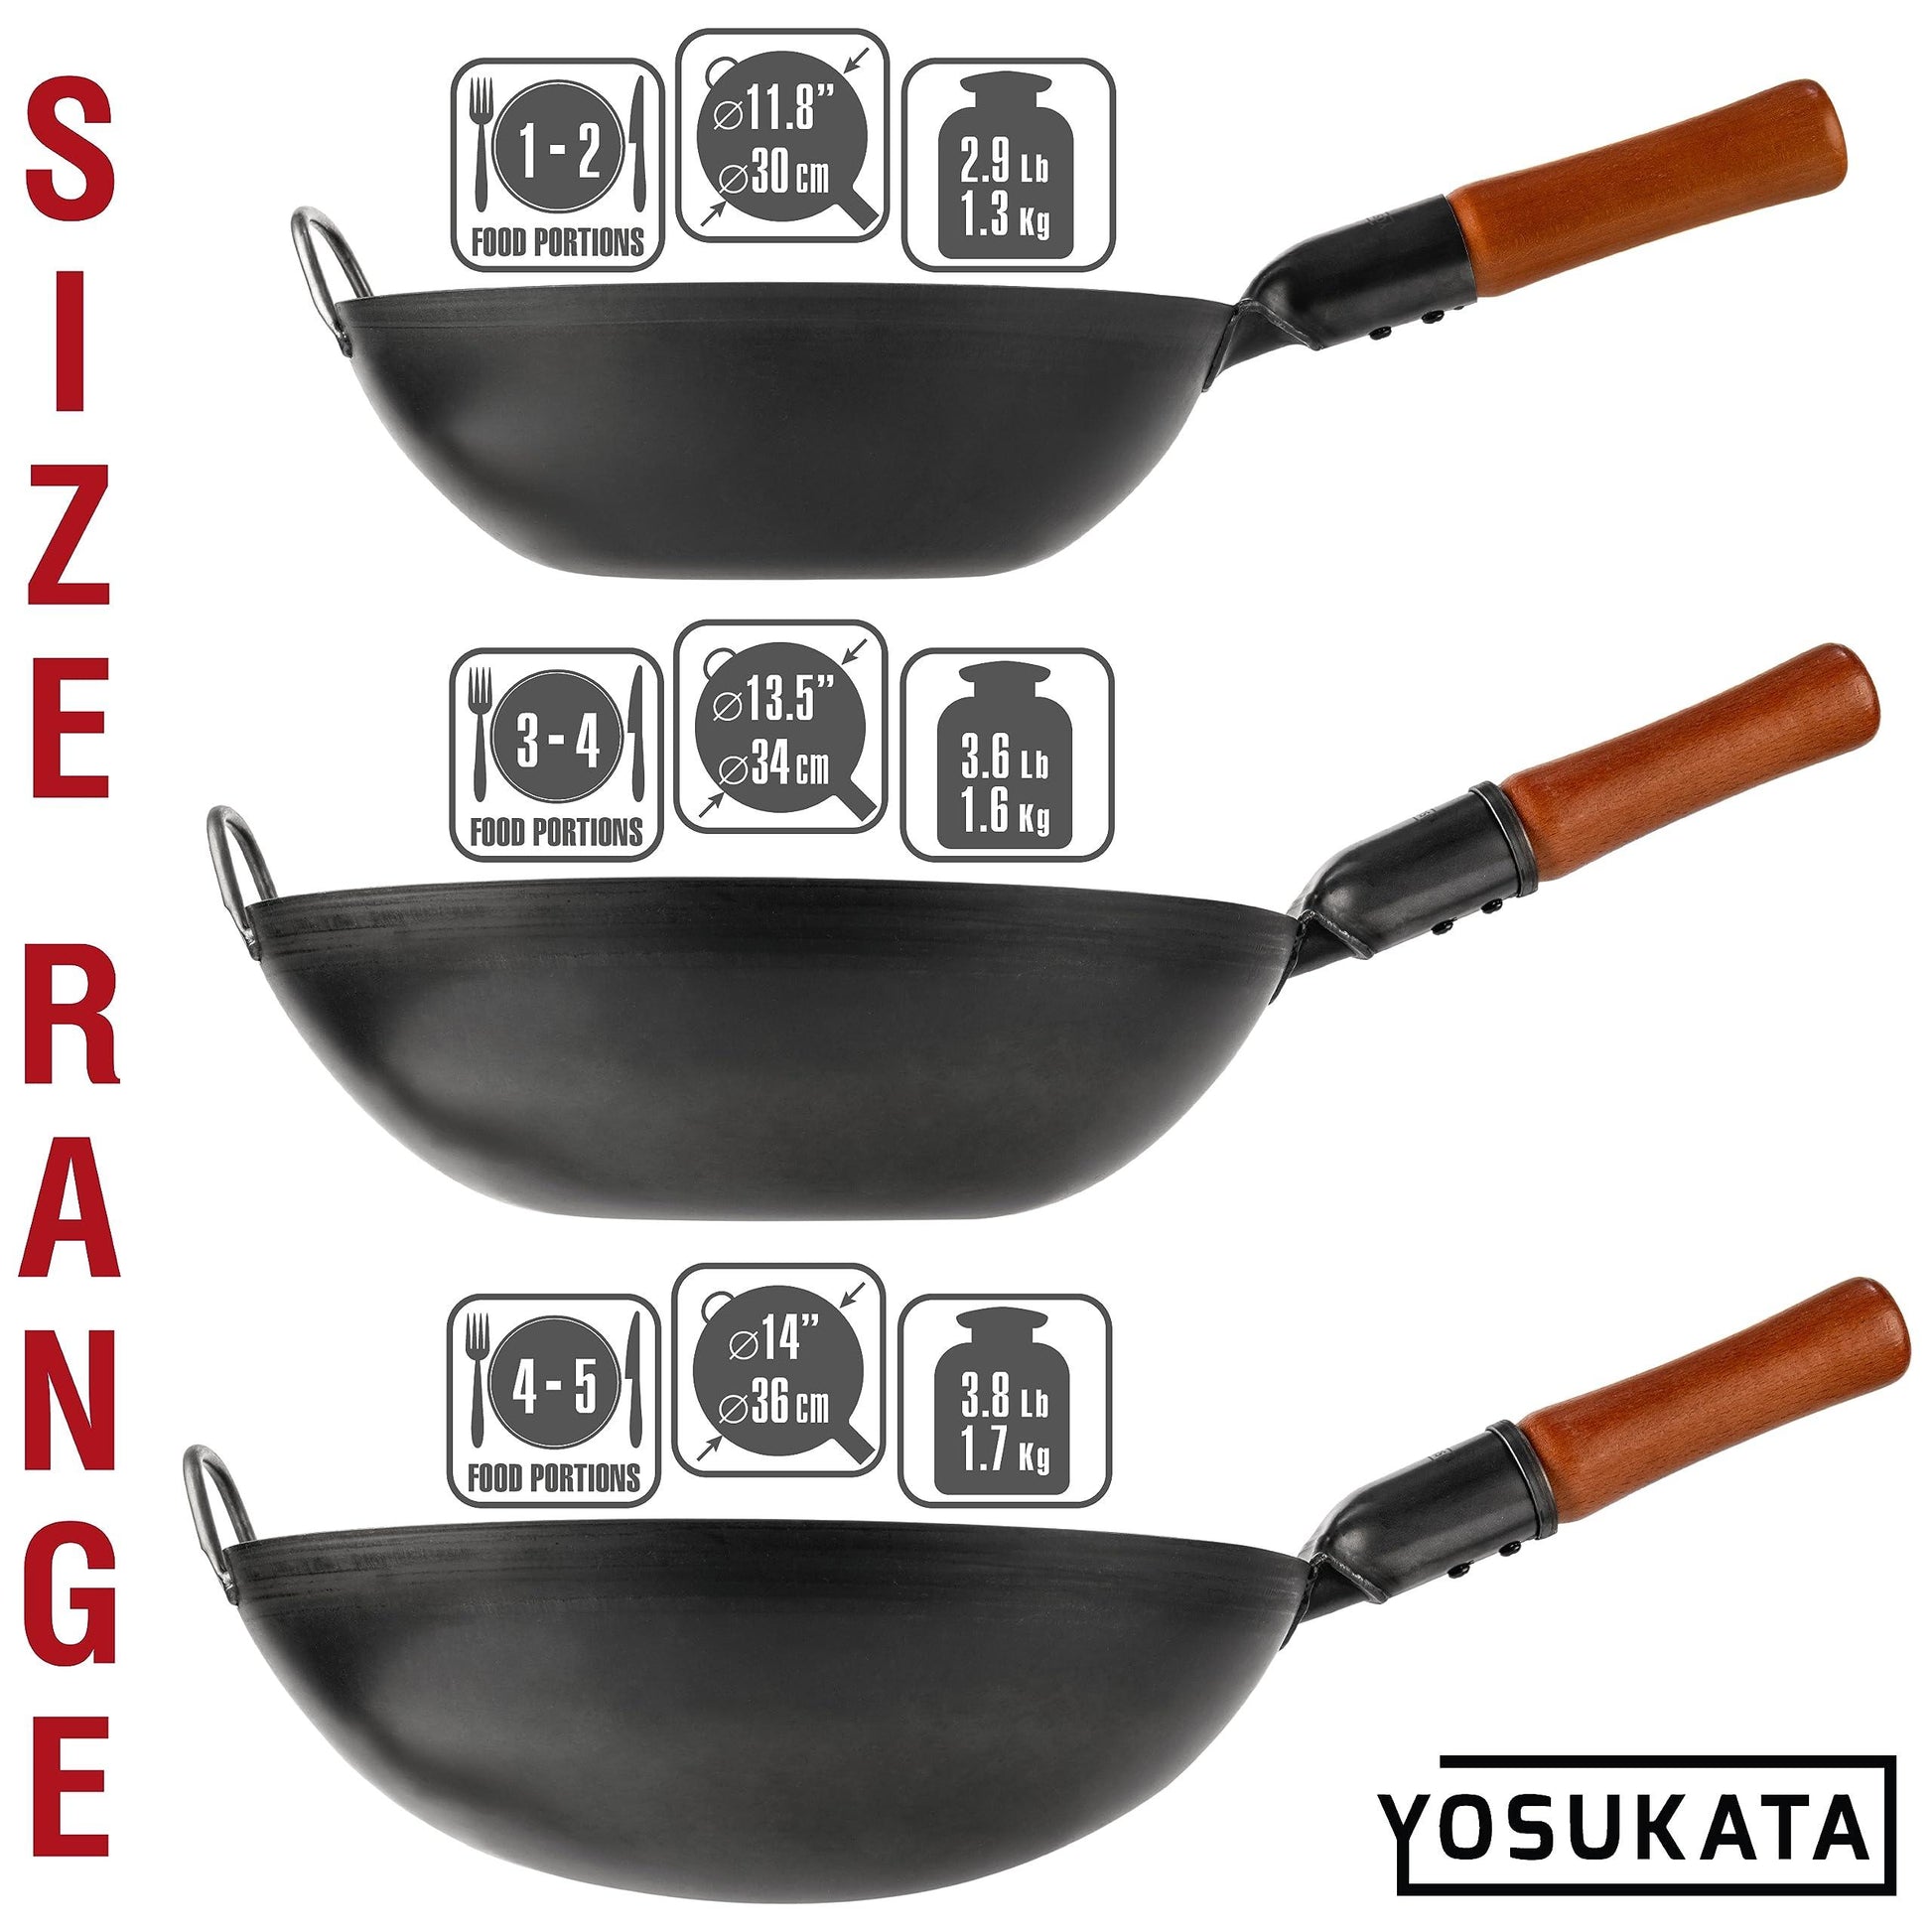 YOSUKATA Carbon Steel Wok Pan - 14 “ Woks and Stir Fry Pans - with Round Bottom Wok - Traditional Chinese Japanese Woks - Black Steel Wok - CookCave